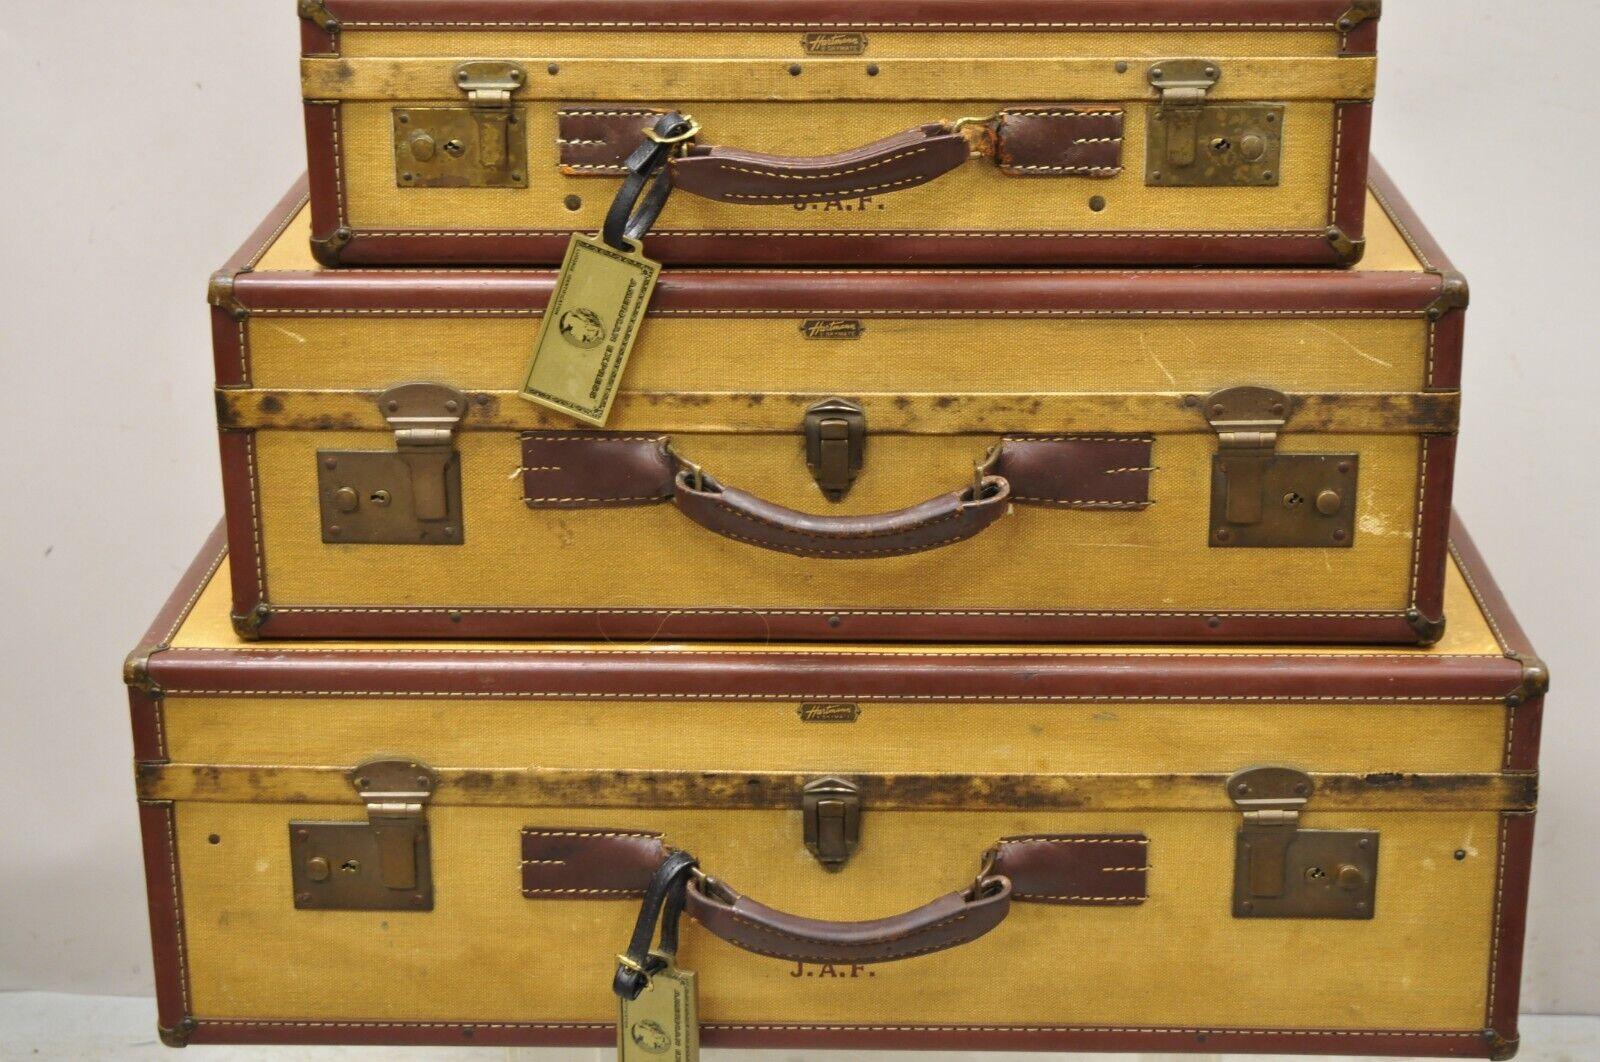 Vintage Hartman Skymate Tan Hard Case Leather Suitcase Luggage, 3 Pc Set 4